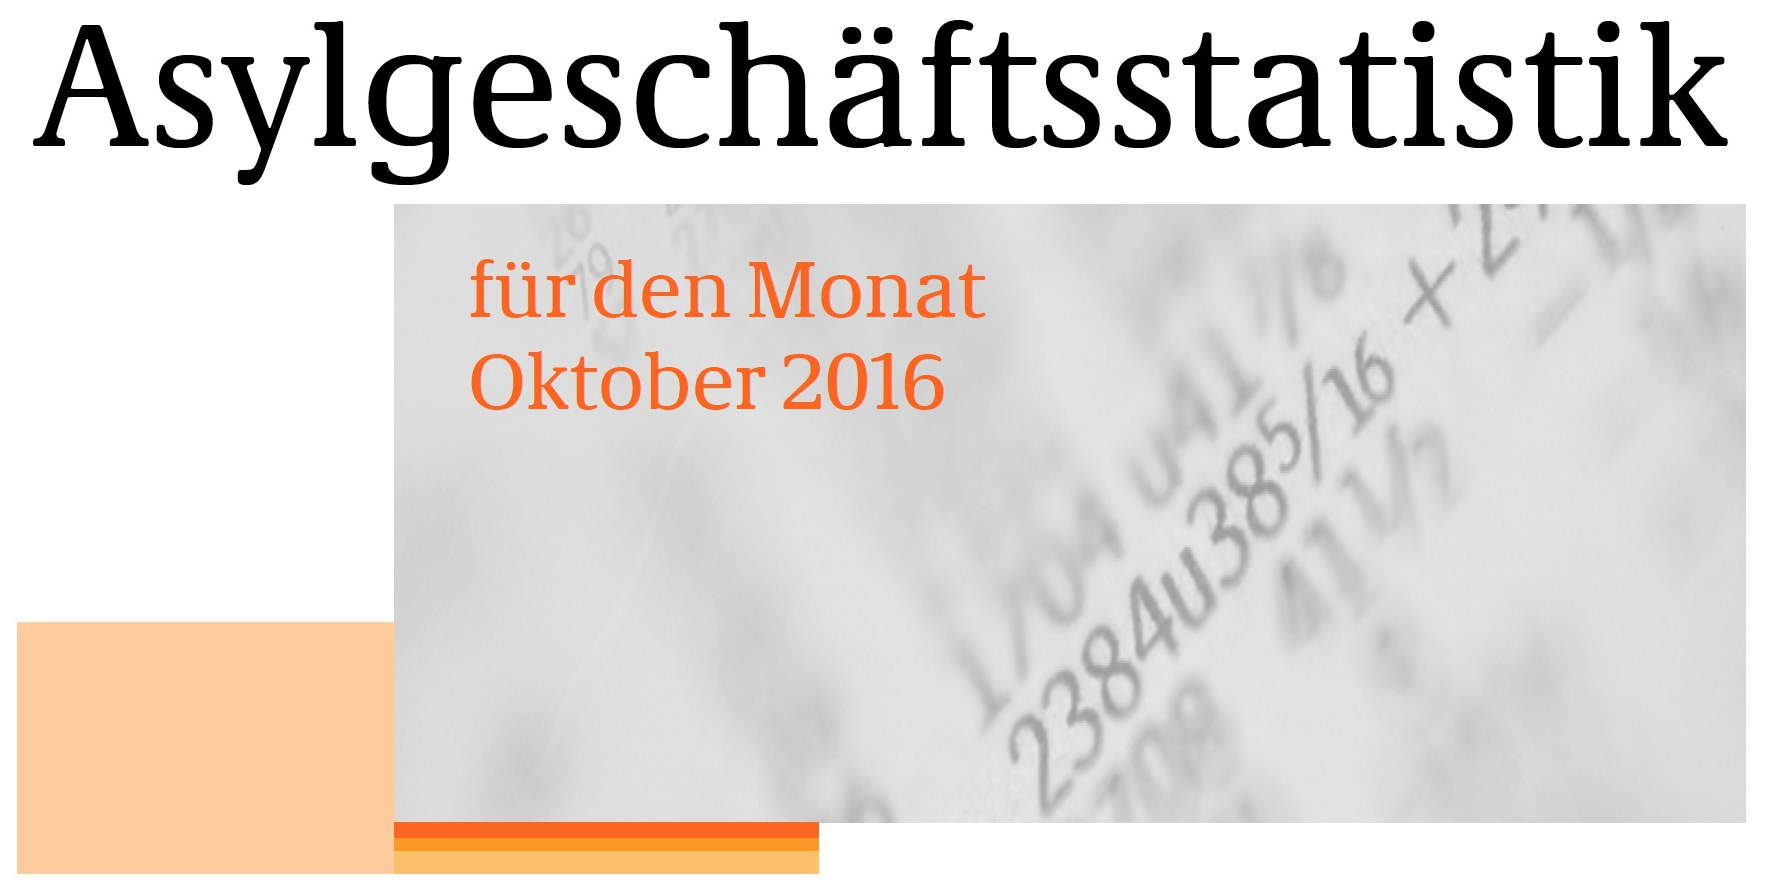 asylgeschaeft_statistik_bundesamt_fuer_migration_und_fluechtlinge_bericht_oktober_2016_asylgeschaeftsbericht